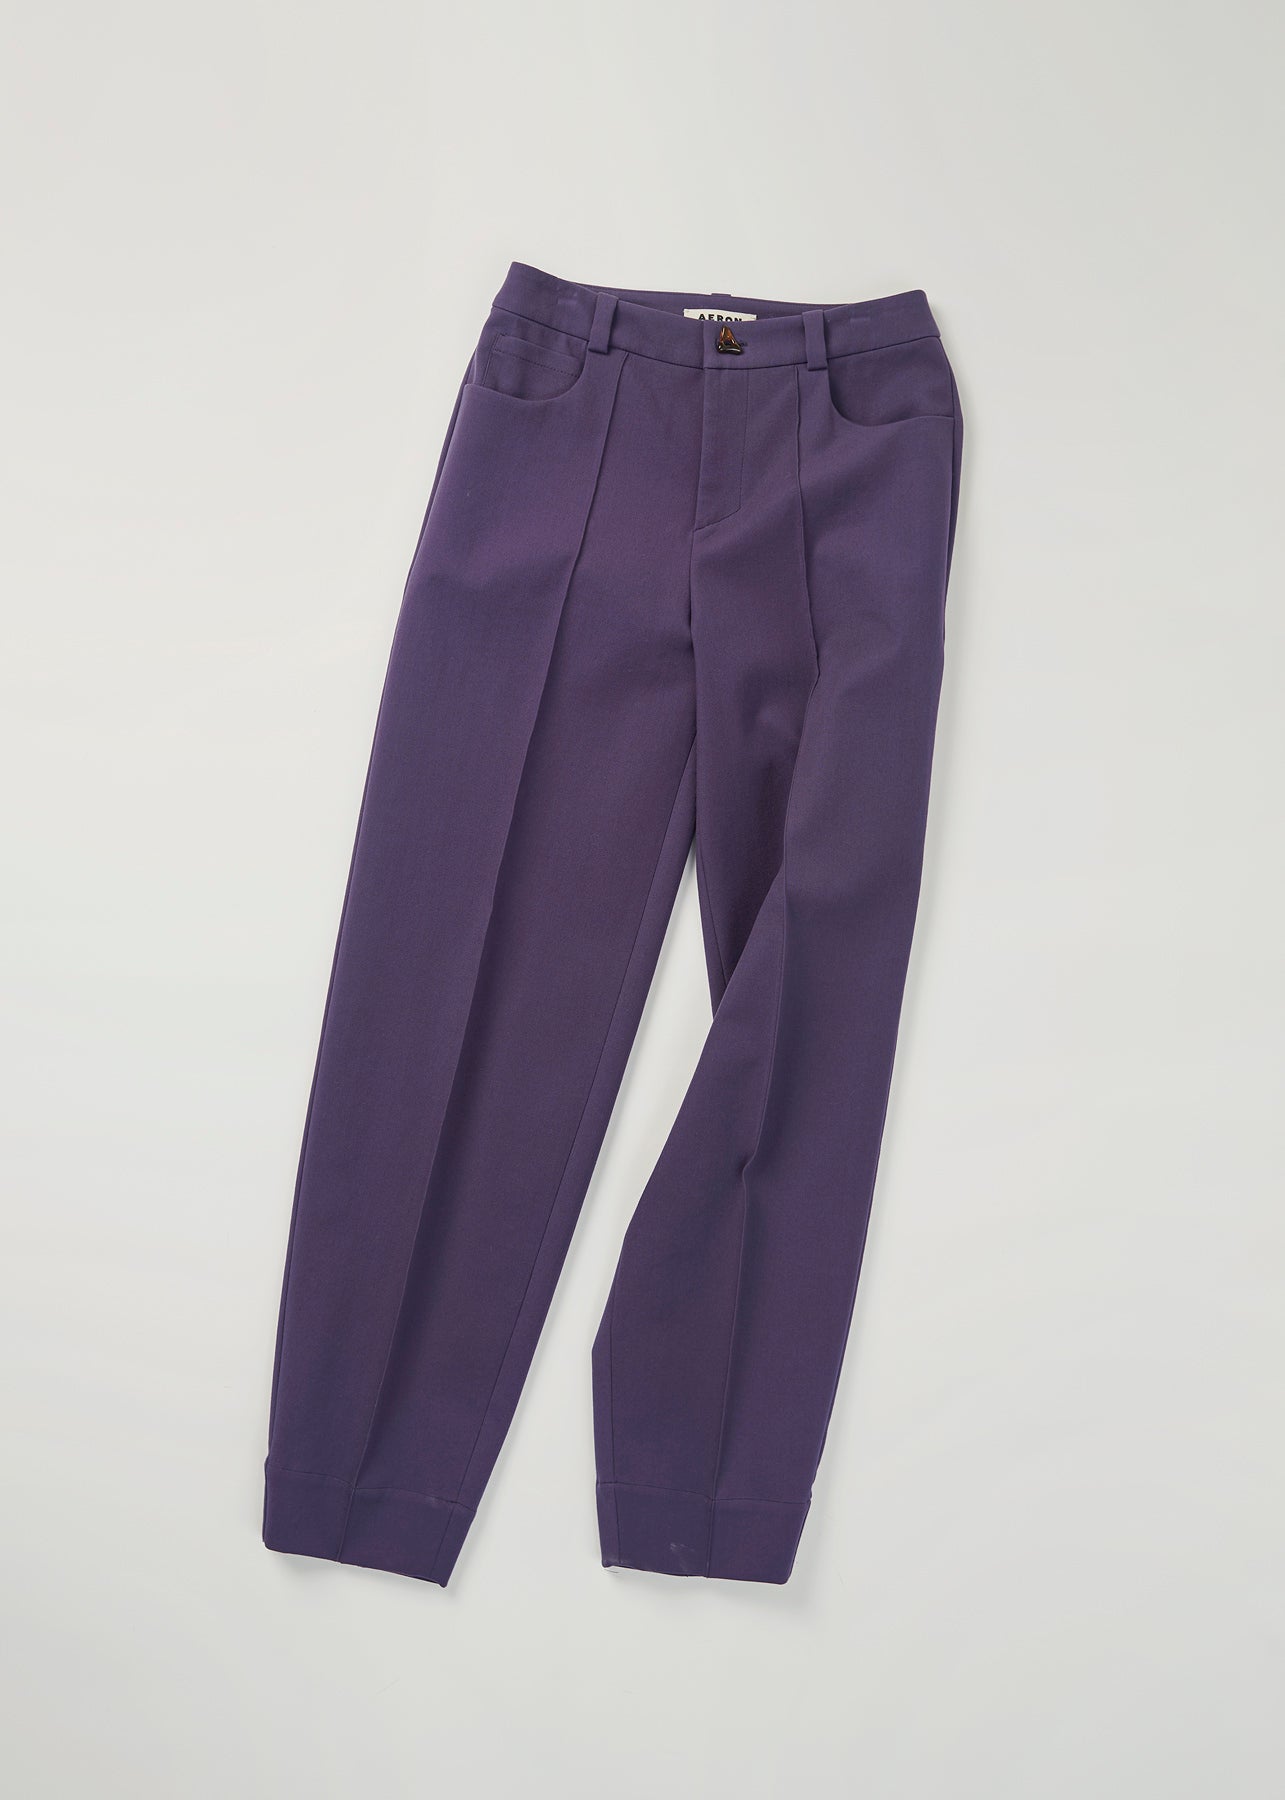 AERON EDGE Glossy leather suiting pants – aubergine